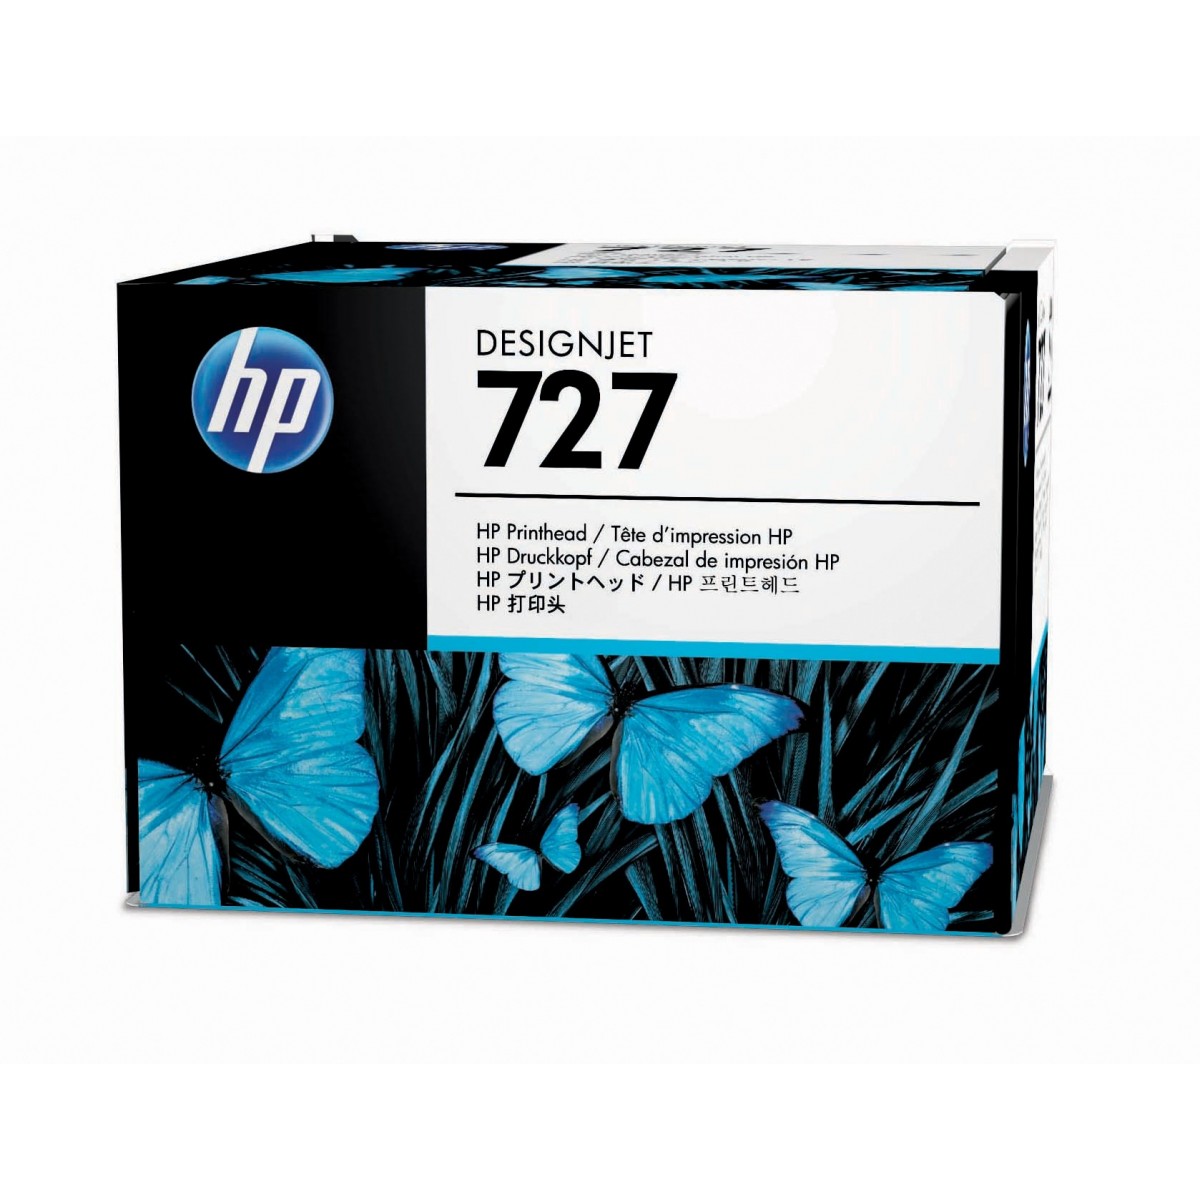 HP 727 - HP DesignJet T920 Printer series; HP DesignJet T1500 Printer series; HP DesignJet T930 Printer... - Inkjet - Cyan - Gre